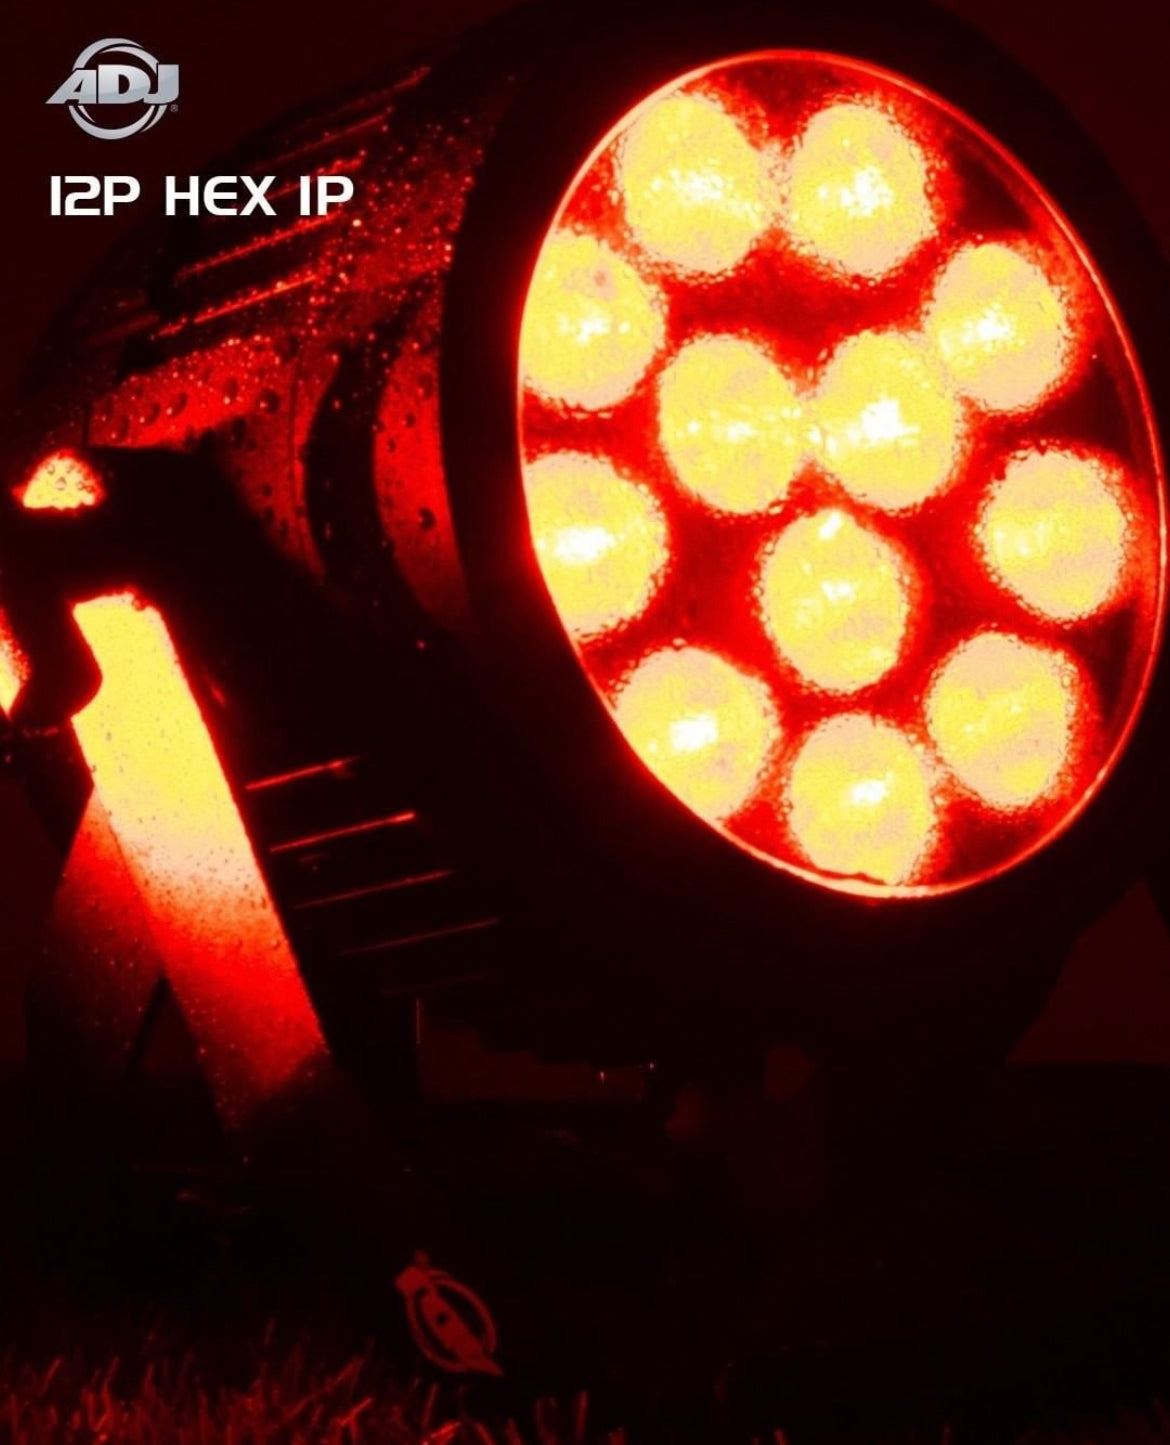 American DJ ADJ 12P HEX IP IP65 Outdoor Rated LED Par Lighting [B-STOCK]